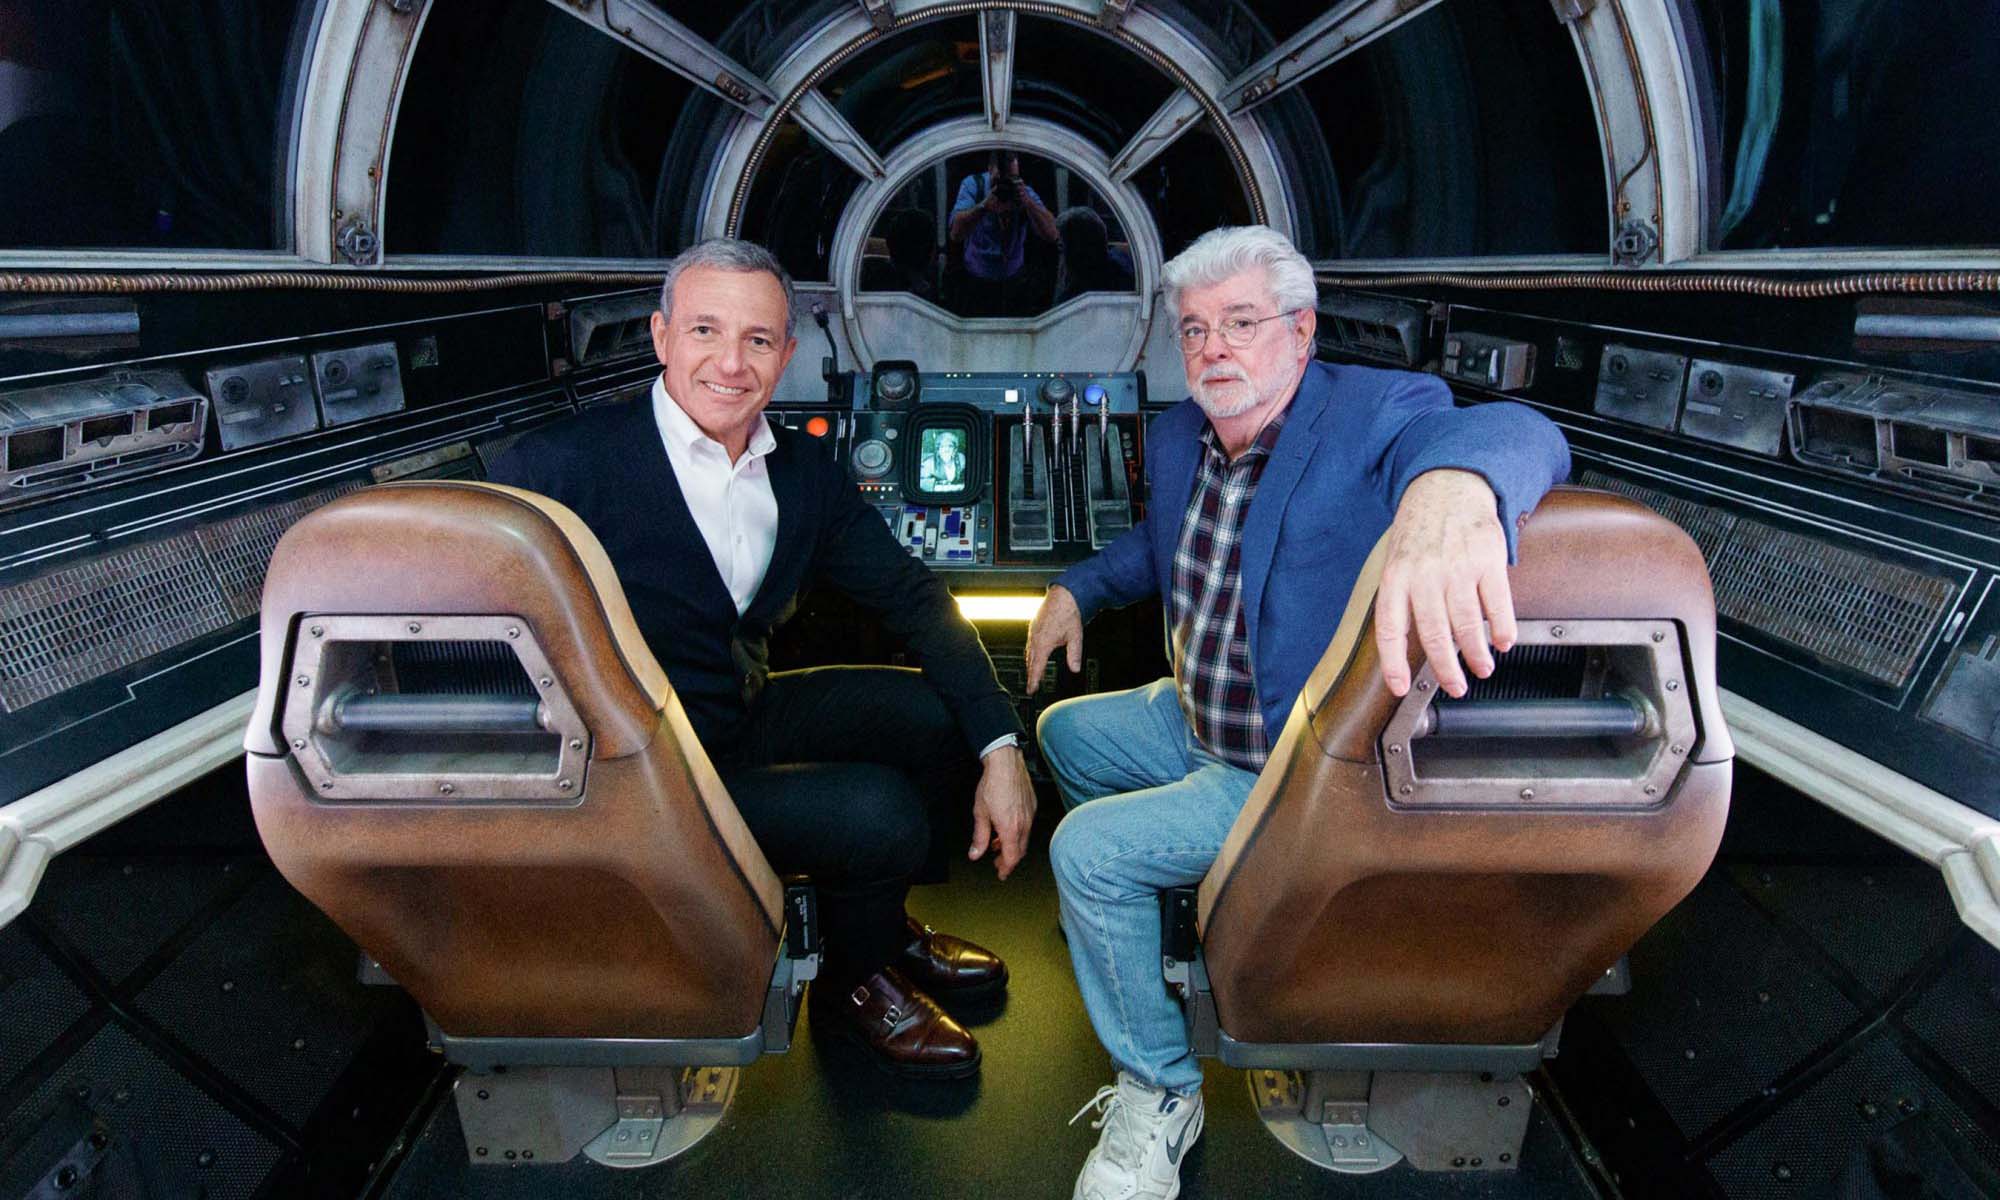 Disney CEO Bob Iger and Star Wars creator George Lucas